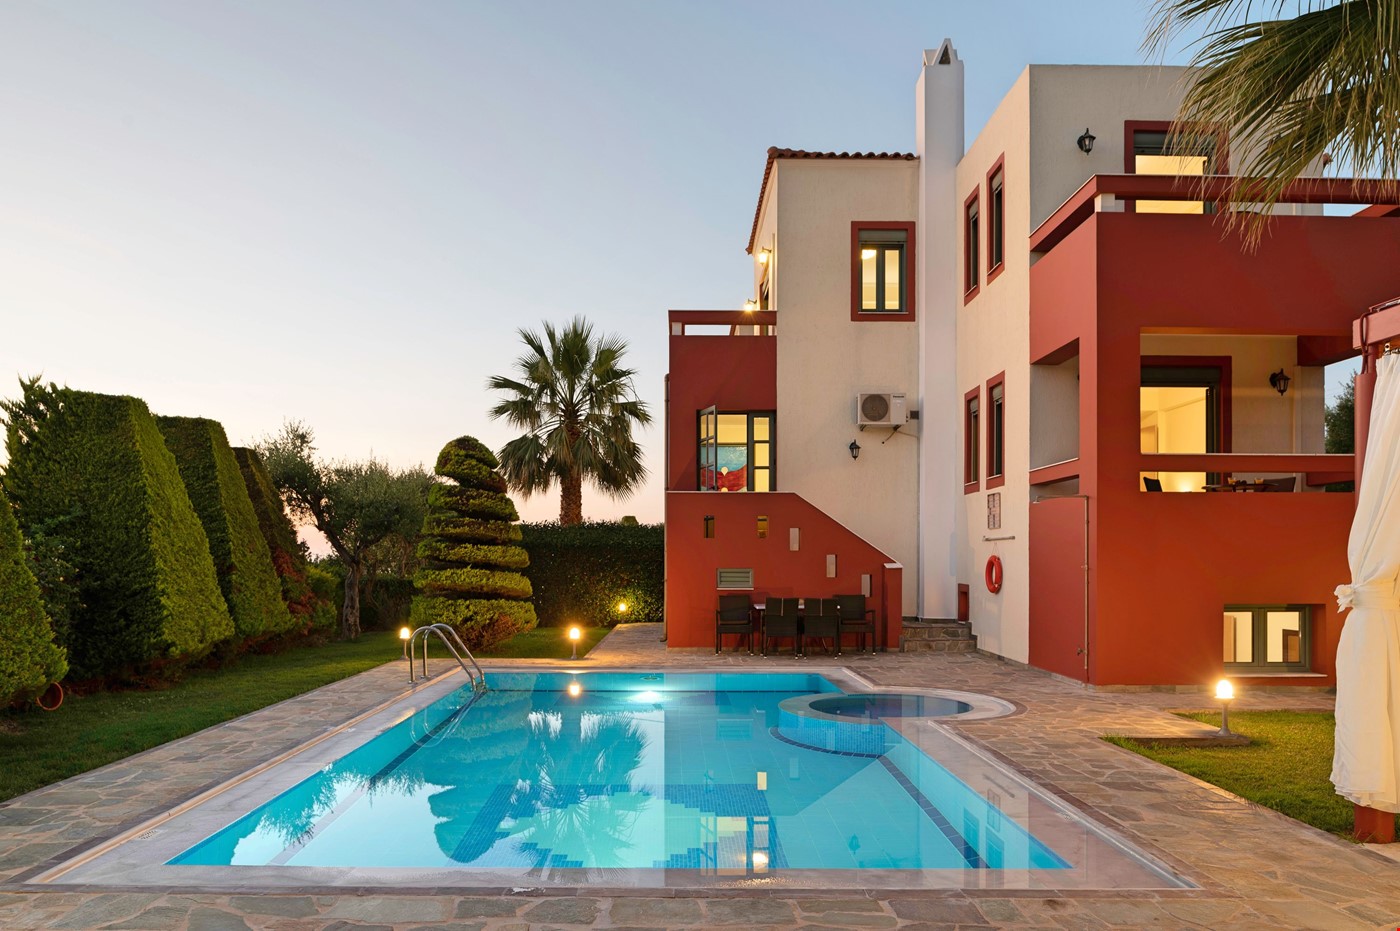 Hotel Xiro Chorio Greece nomad remote 0d5880c0-a50f-4b1e-9cd6-7dd7f10f049e_SwimmingPooldawn1VillaAlkyoniAlkyonidesVillasRethymnoCrete.jpg